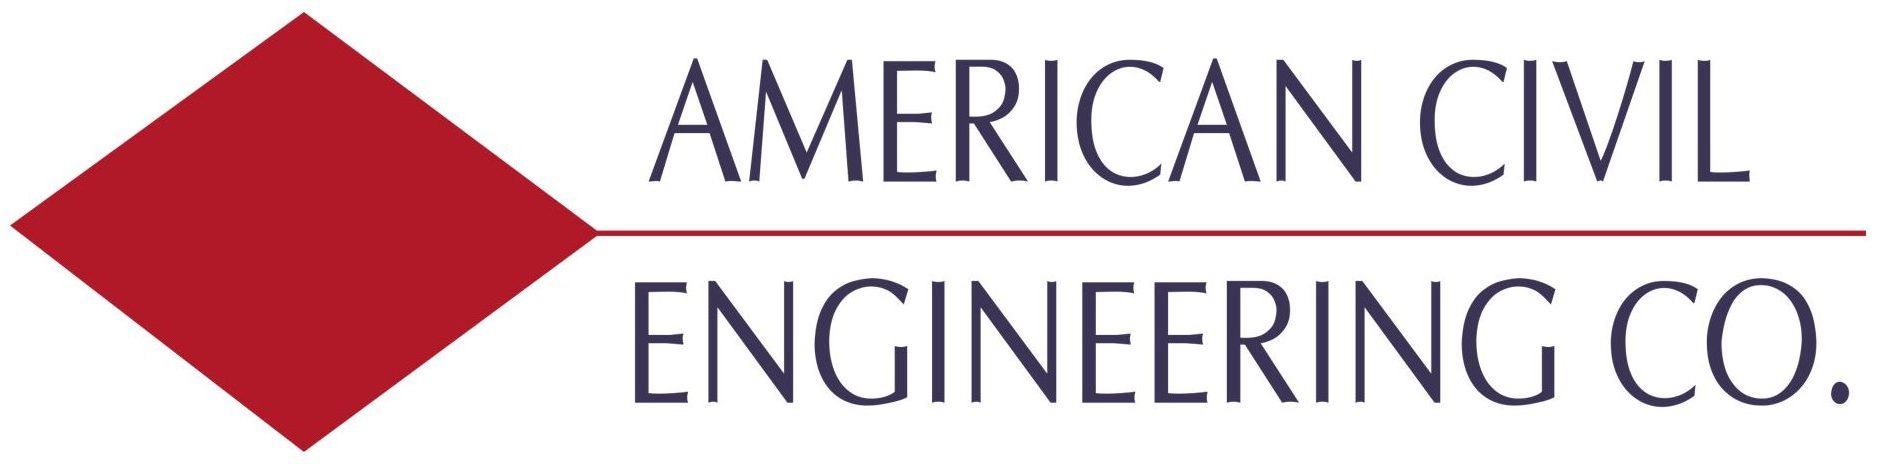 American Civil Engineering Company